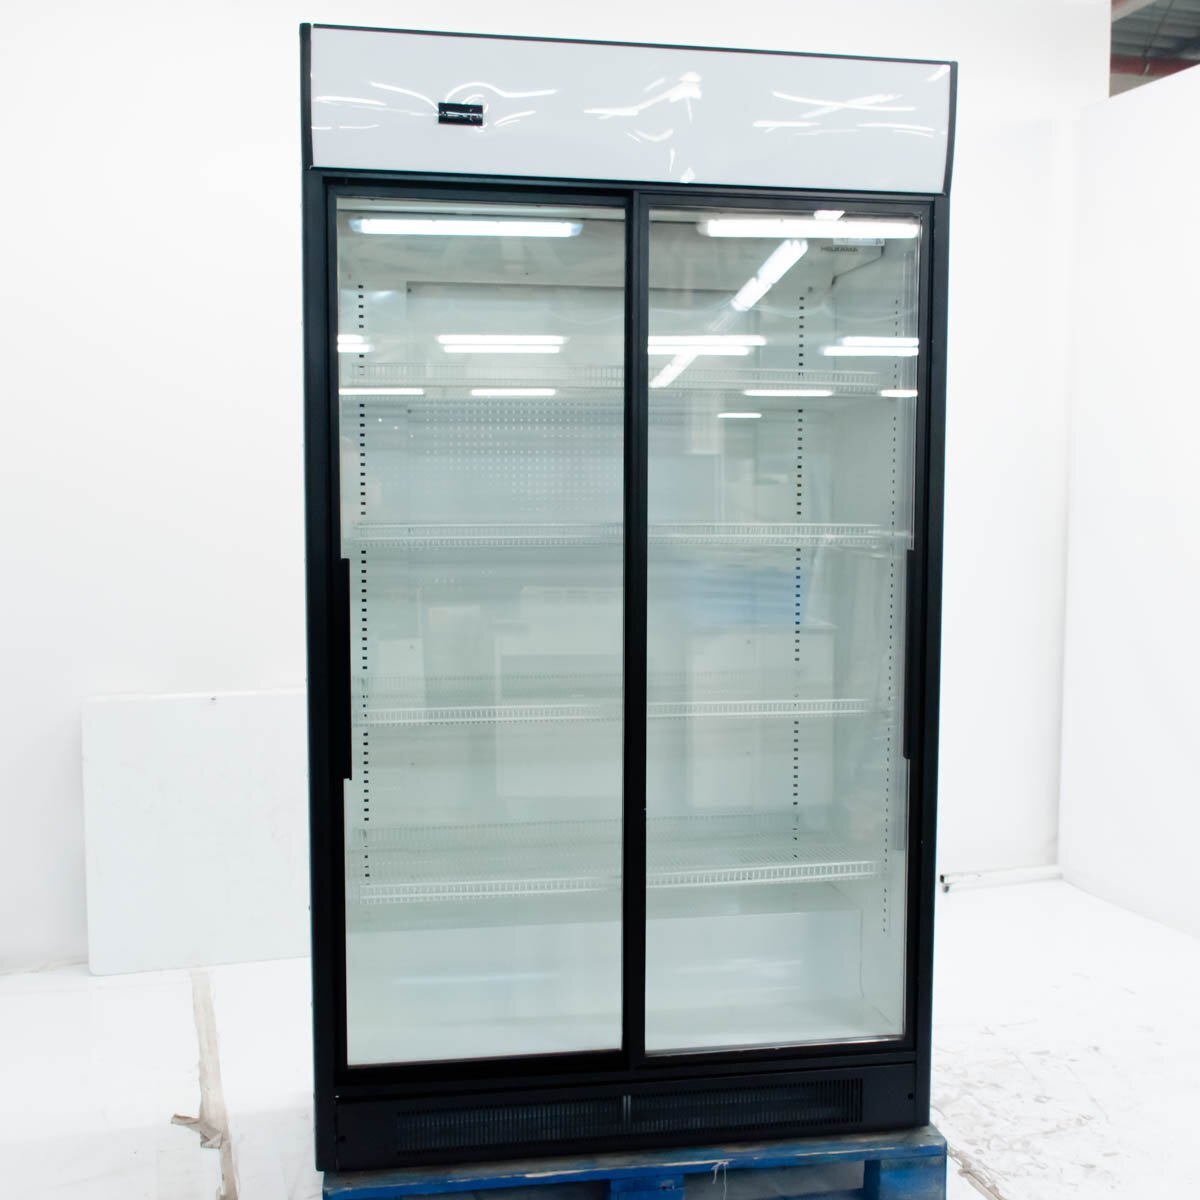 Ремонт холодильных шкафов helkama